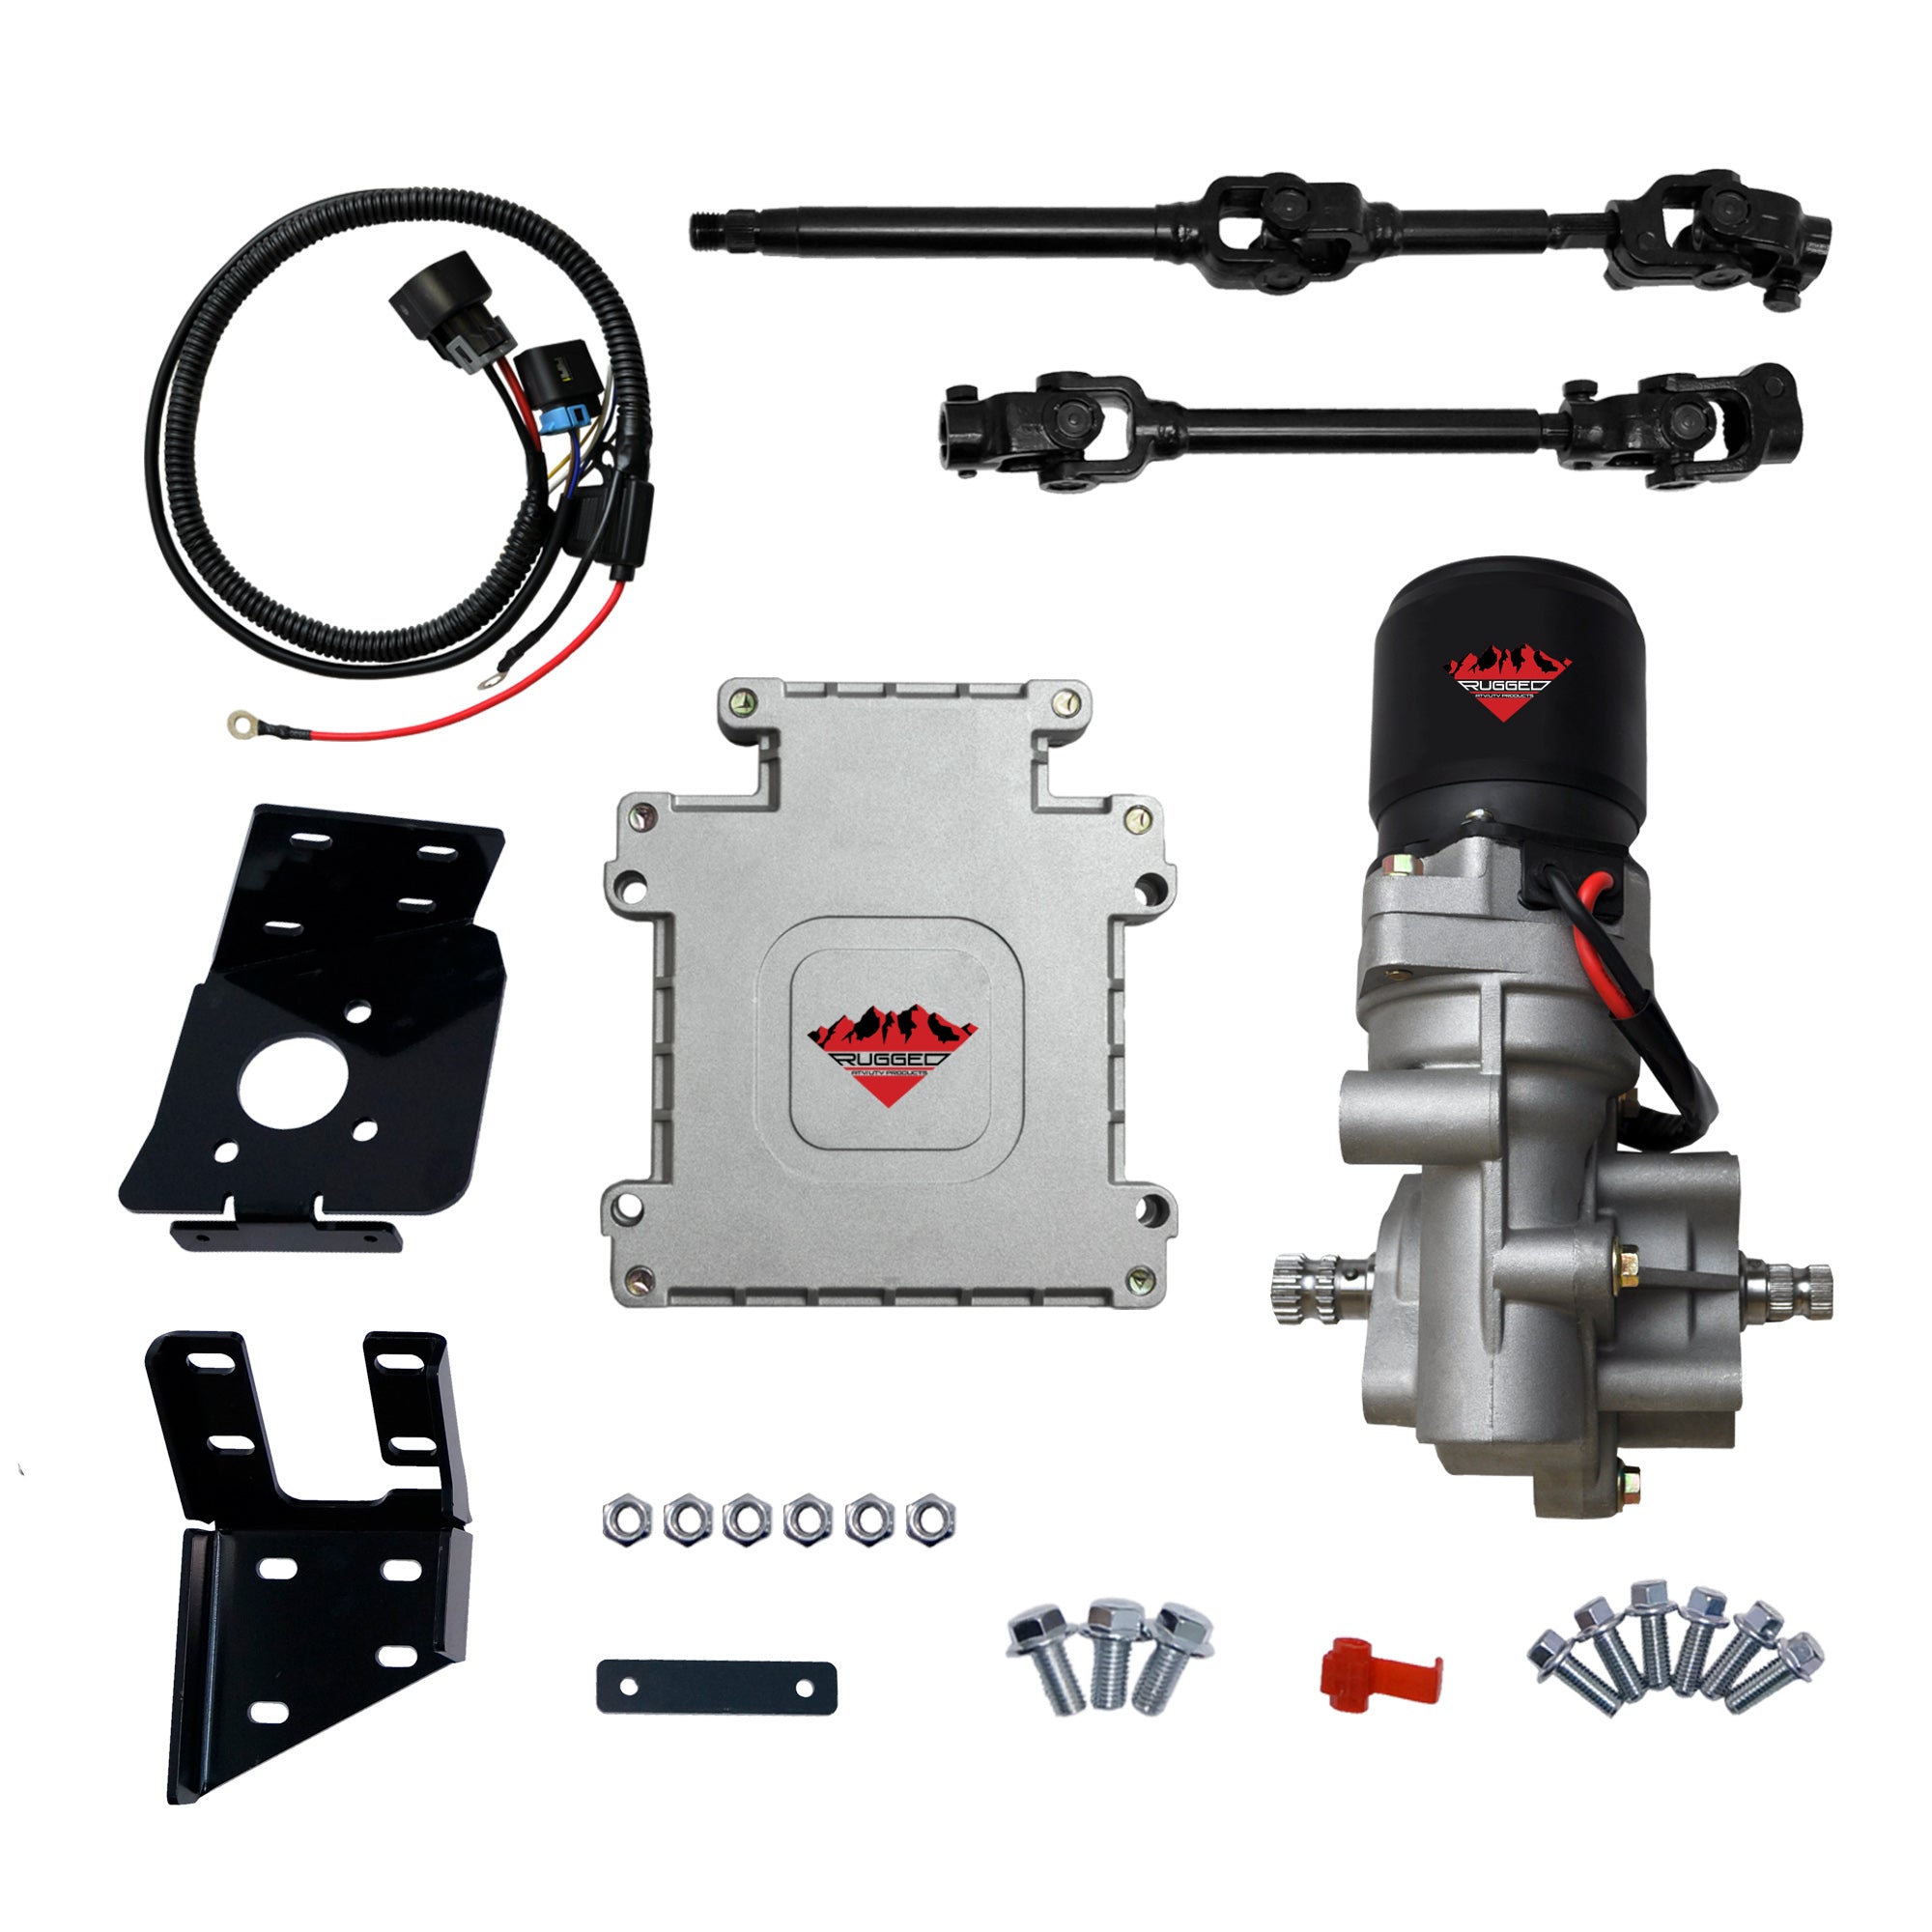 Electric Power Steering Kit for Polaris RZR 900 